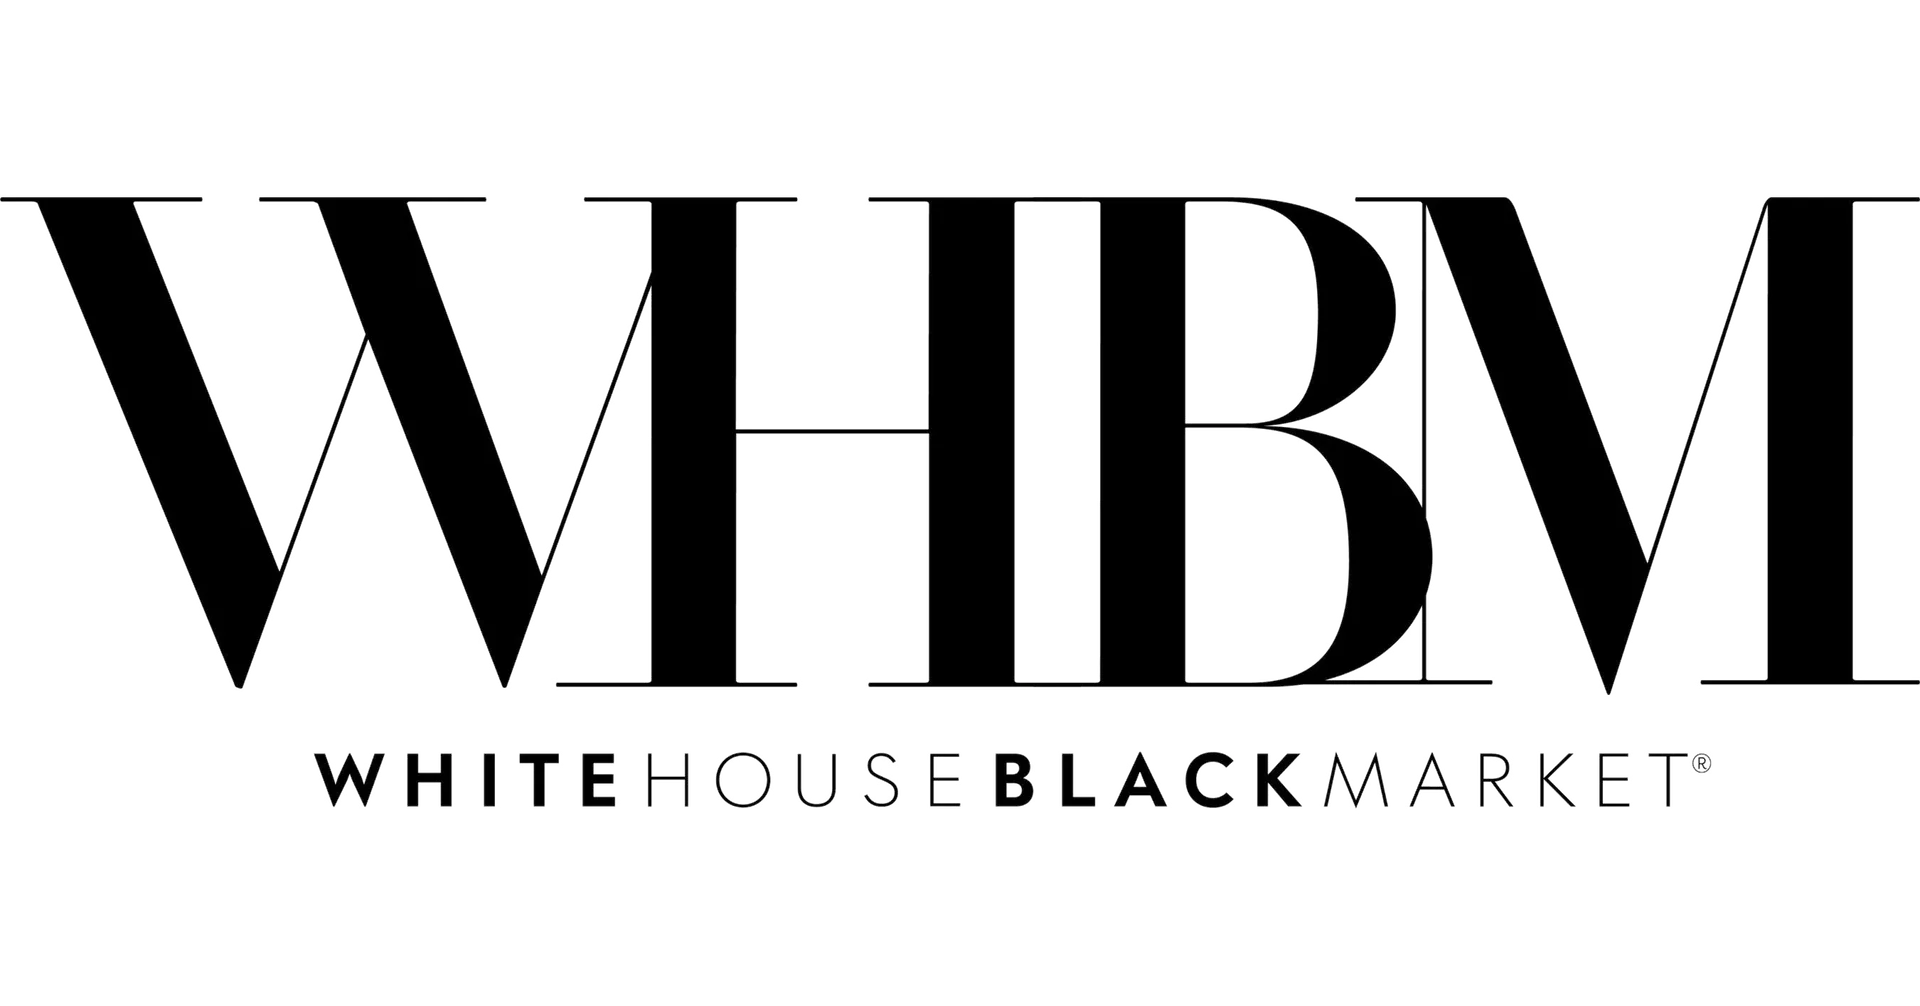 WHITE HOUSE BLACK MARKET logo